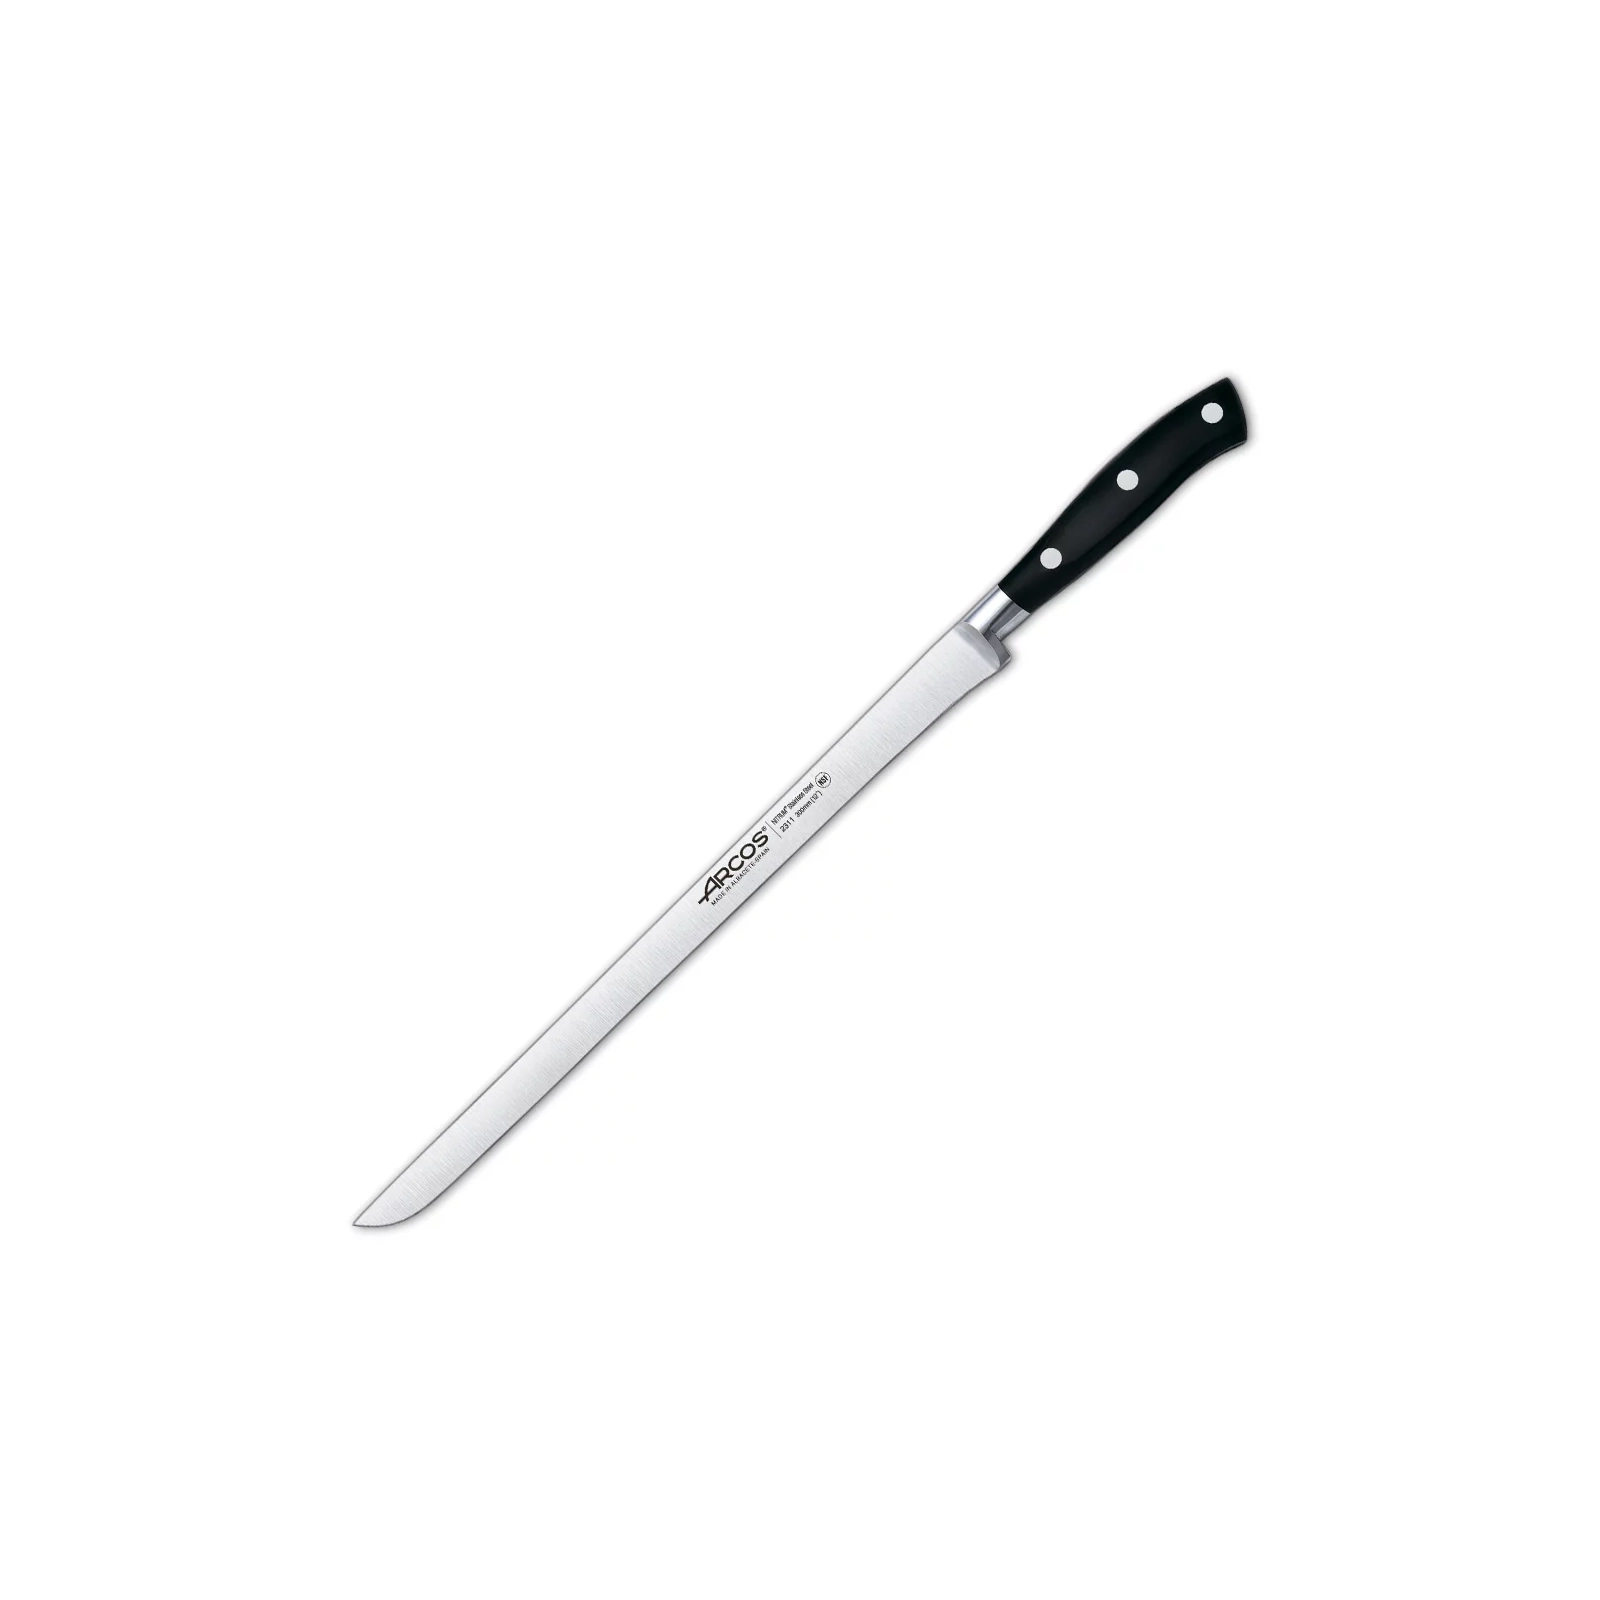 Кухонный нож Arcos Riviera для окосту 300 мм White (231124)